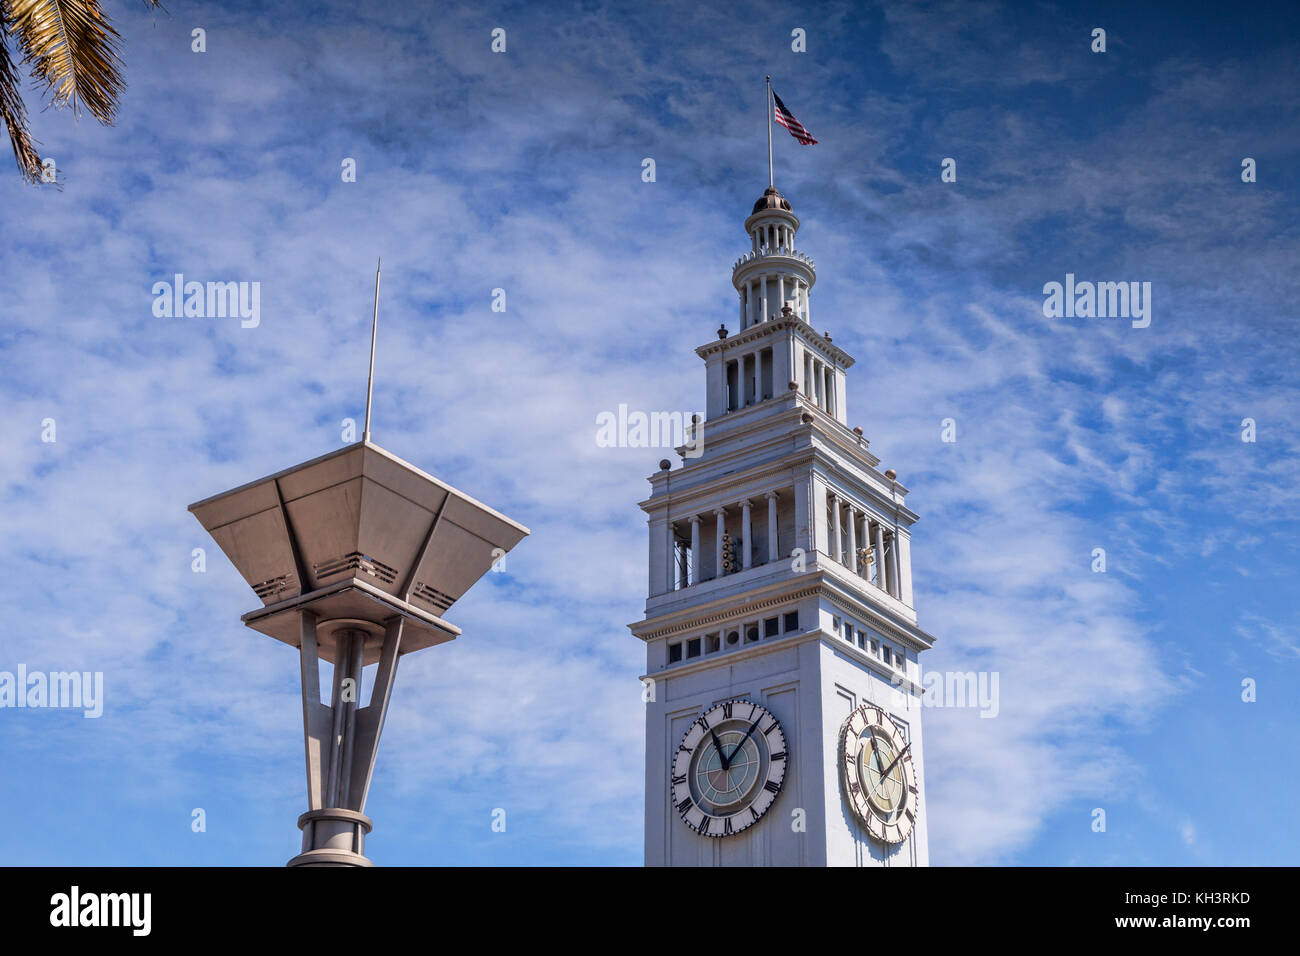 San Francisco Ferry Building Clock Tower. Stockfoto